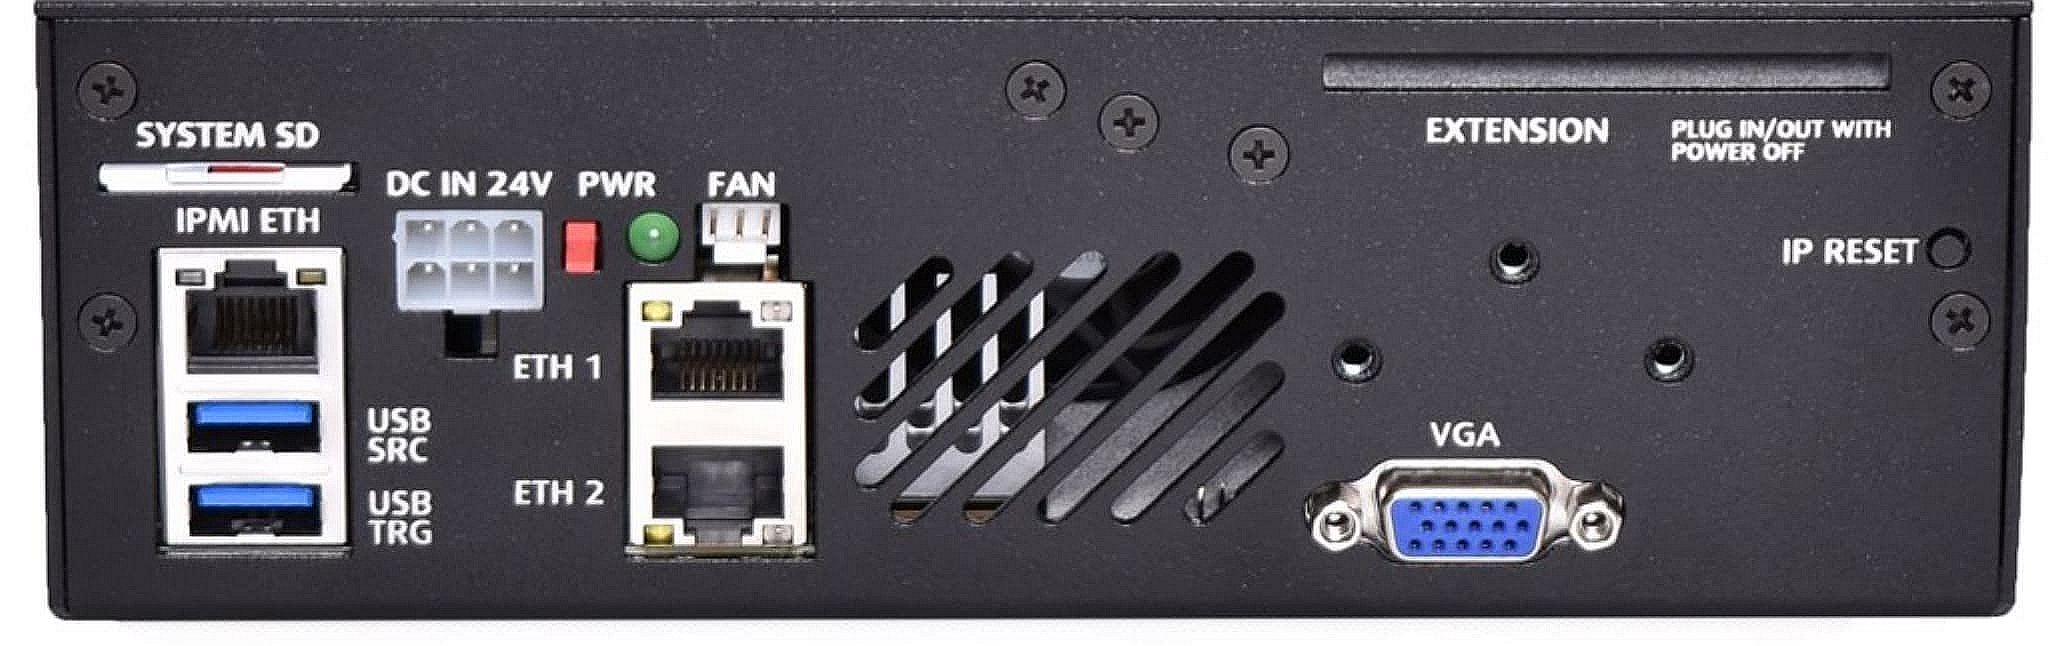 Two 10-Gigabit Ethernet ports on the back panel of DiskSense 2